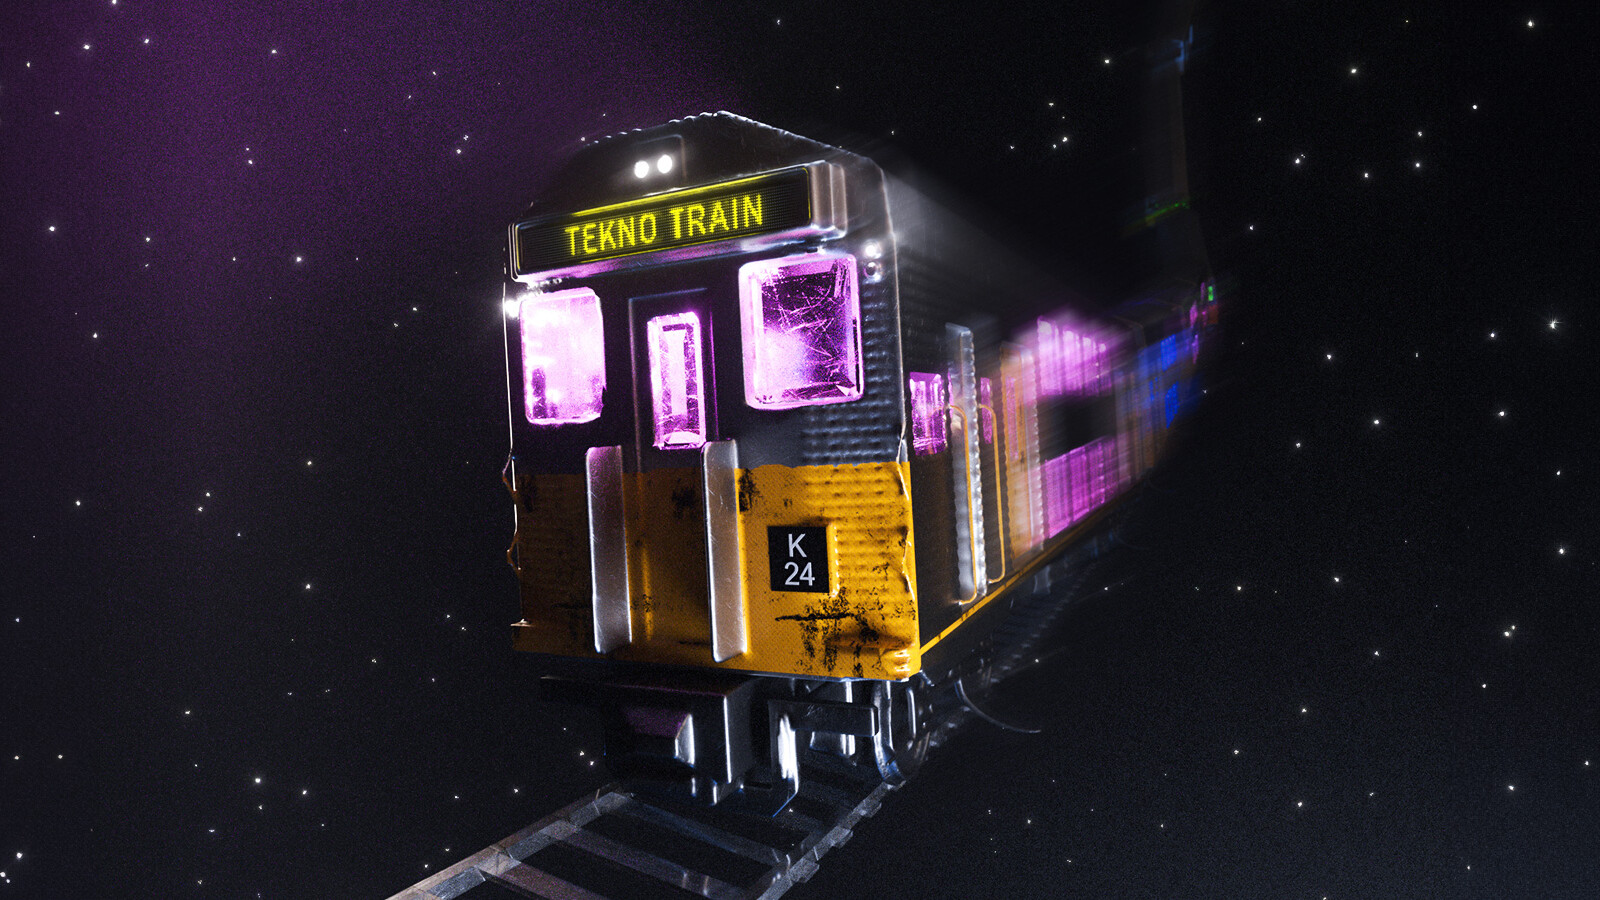 Teckno Train by Paul Mac